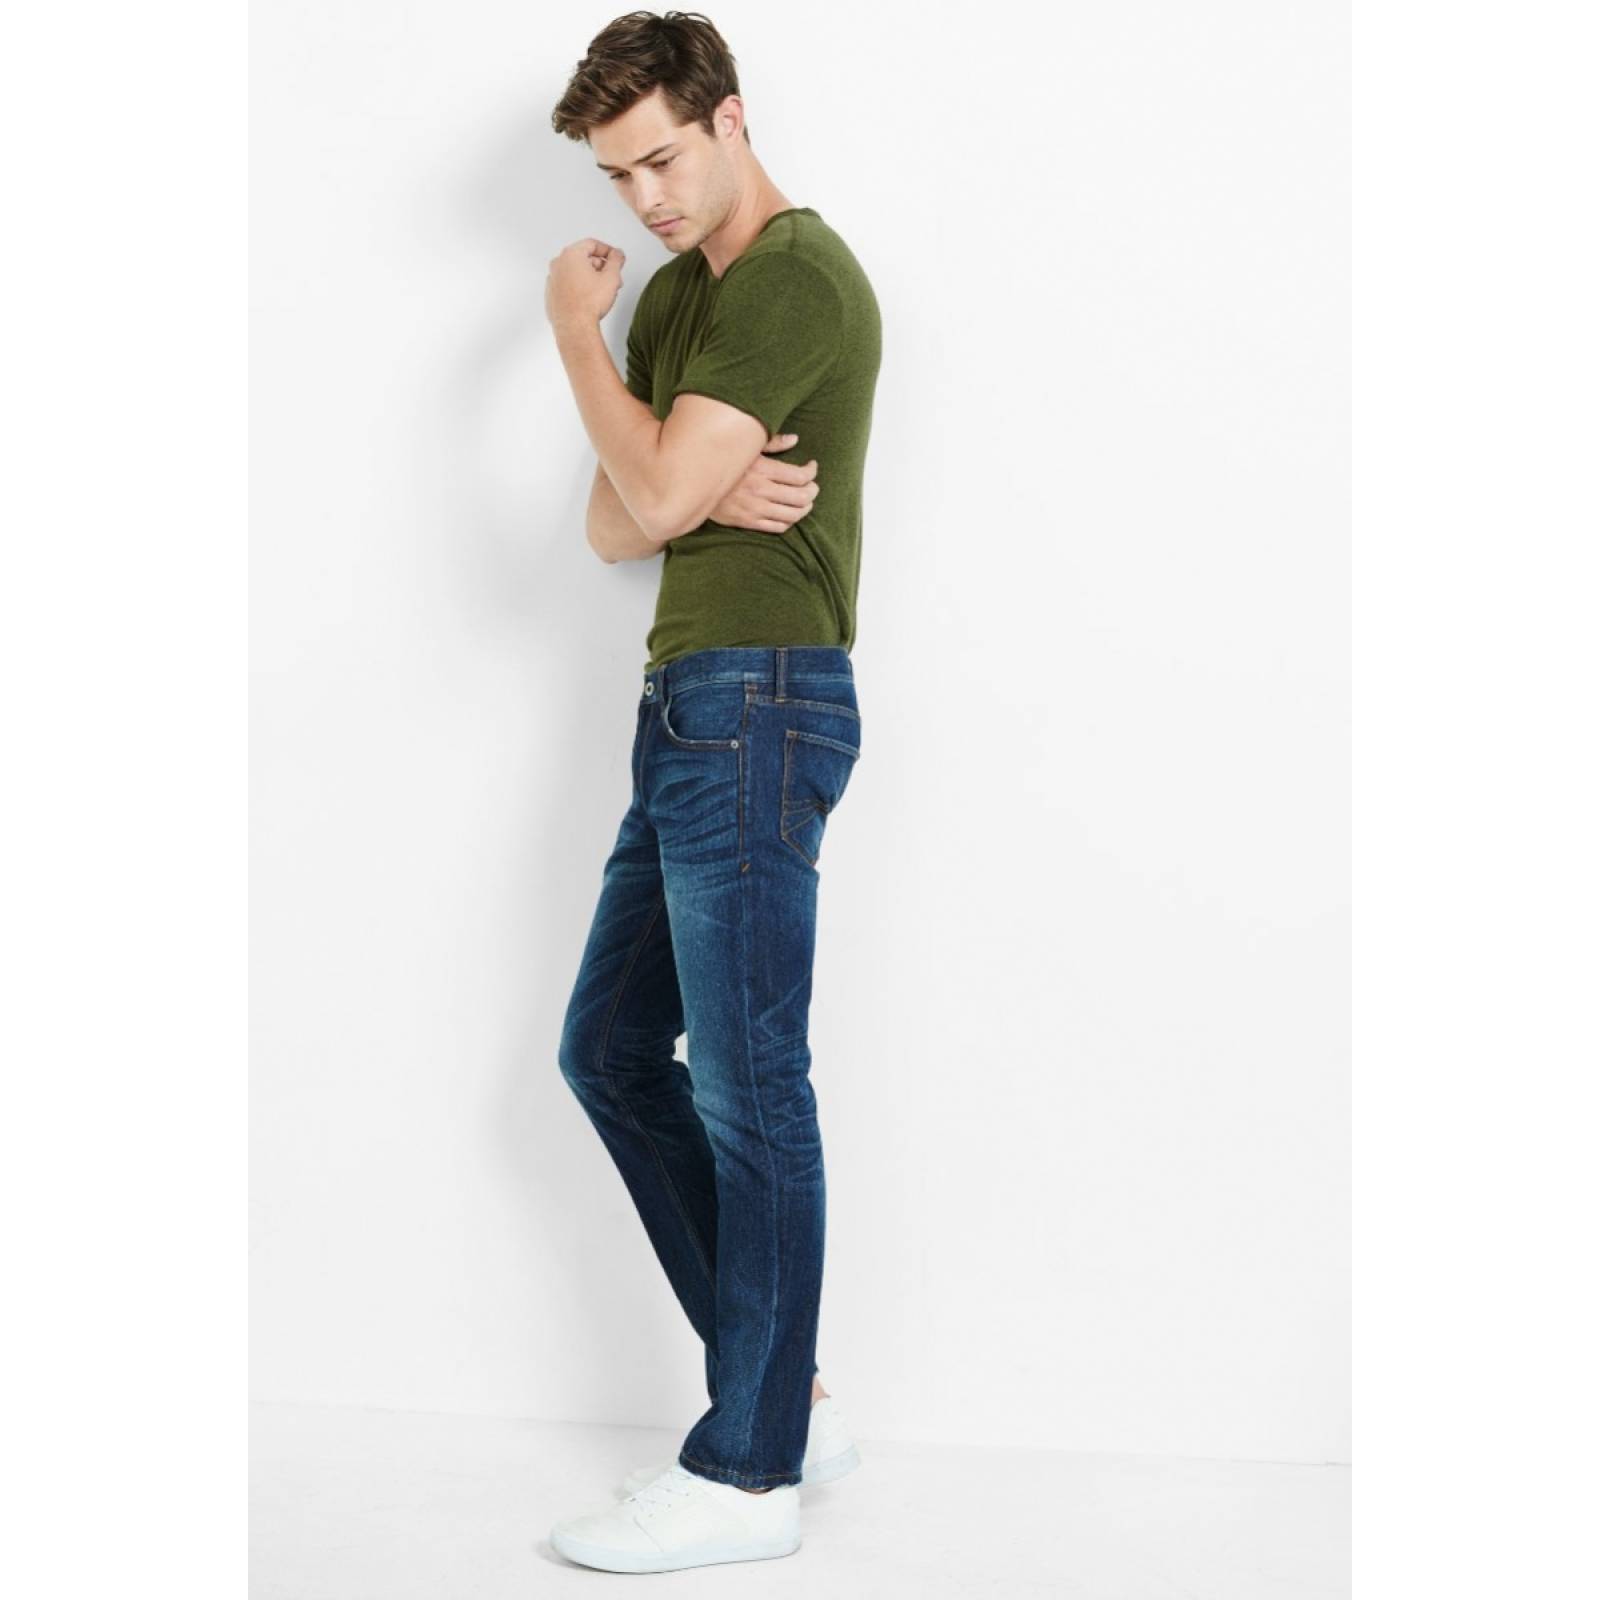 Jeans Slim Fit Slim Leg Performance Stretch para Caballero